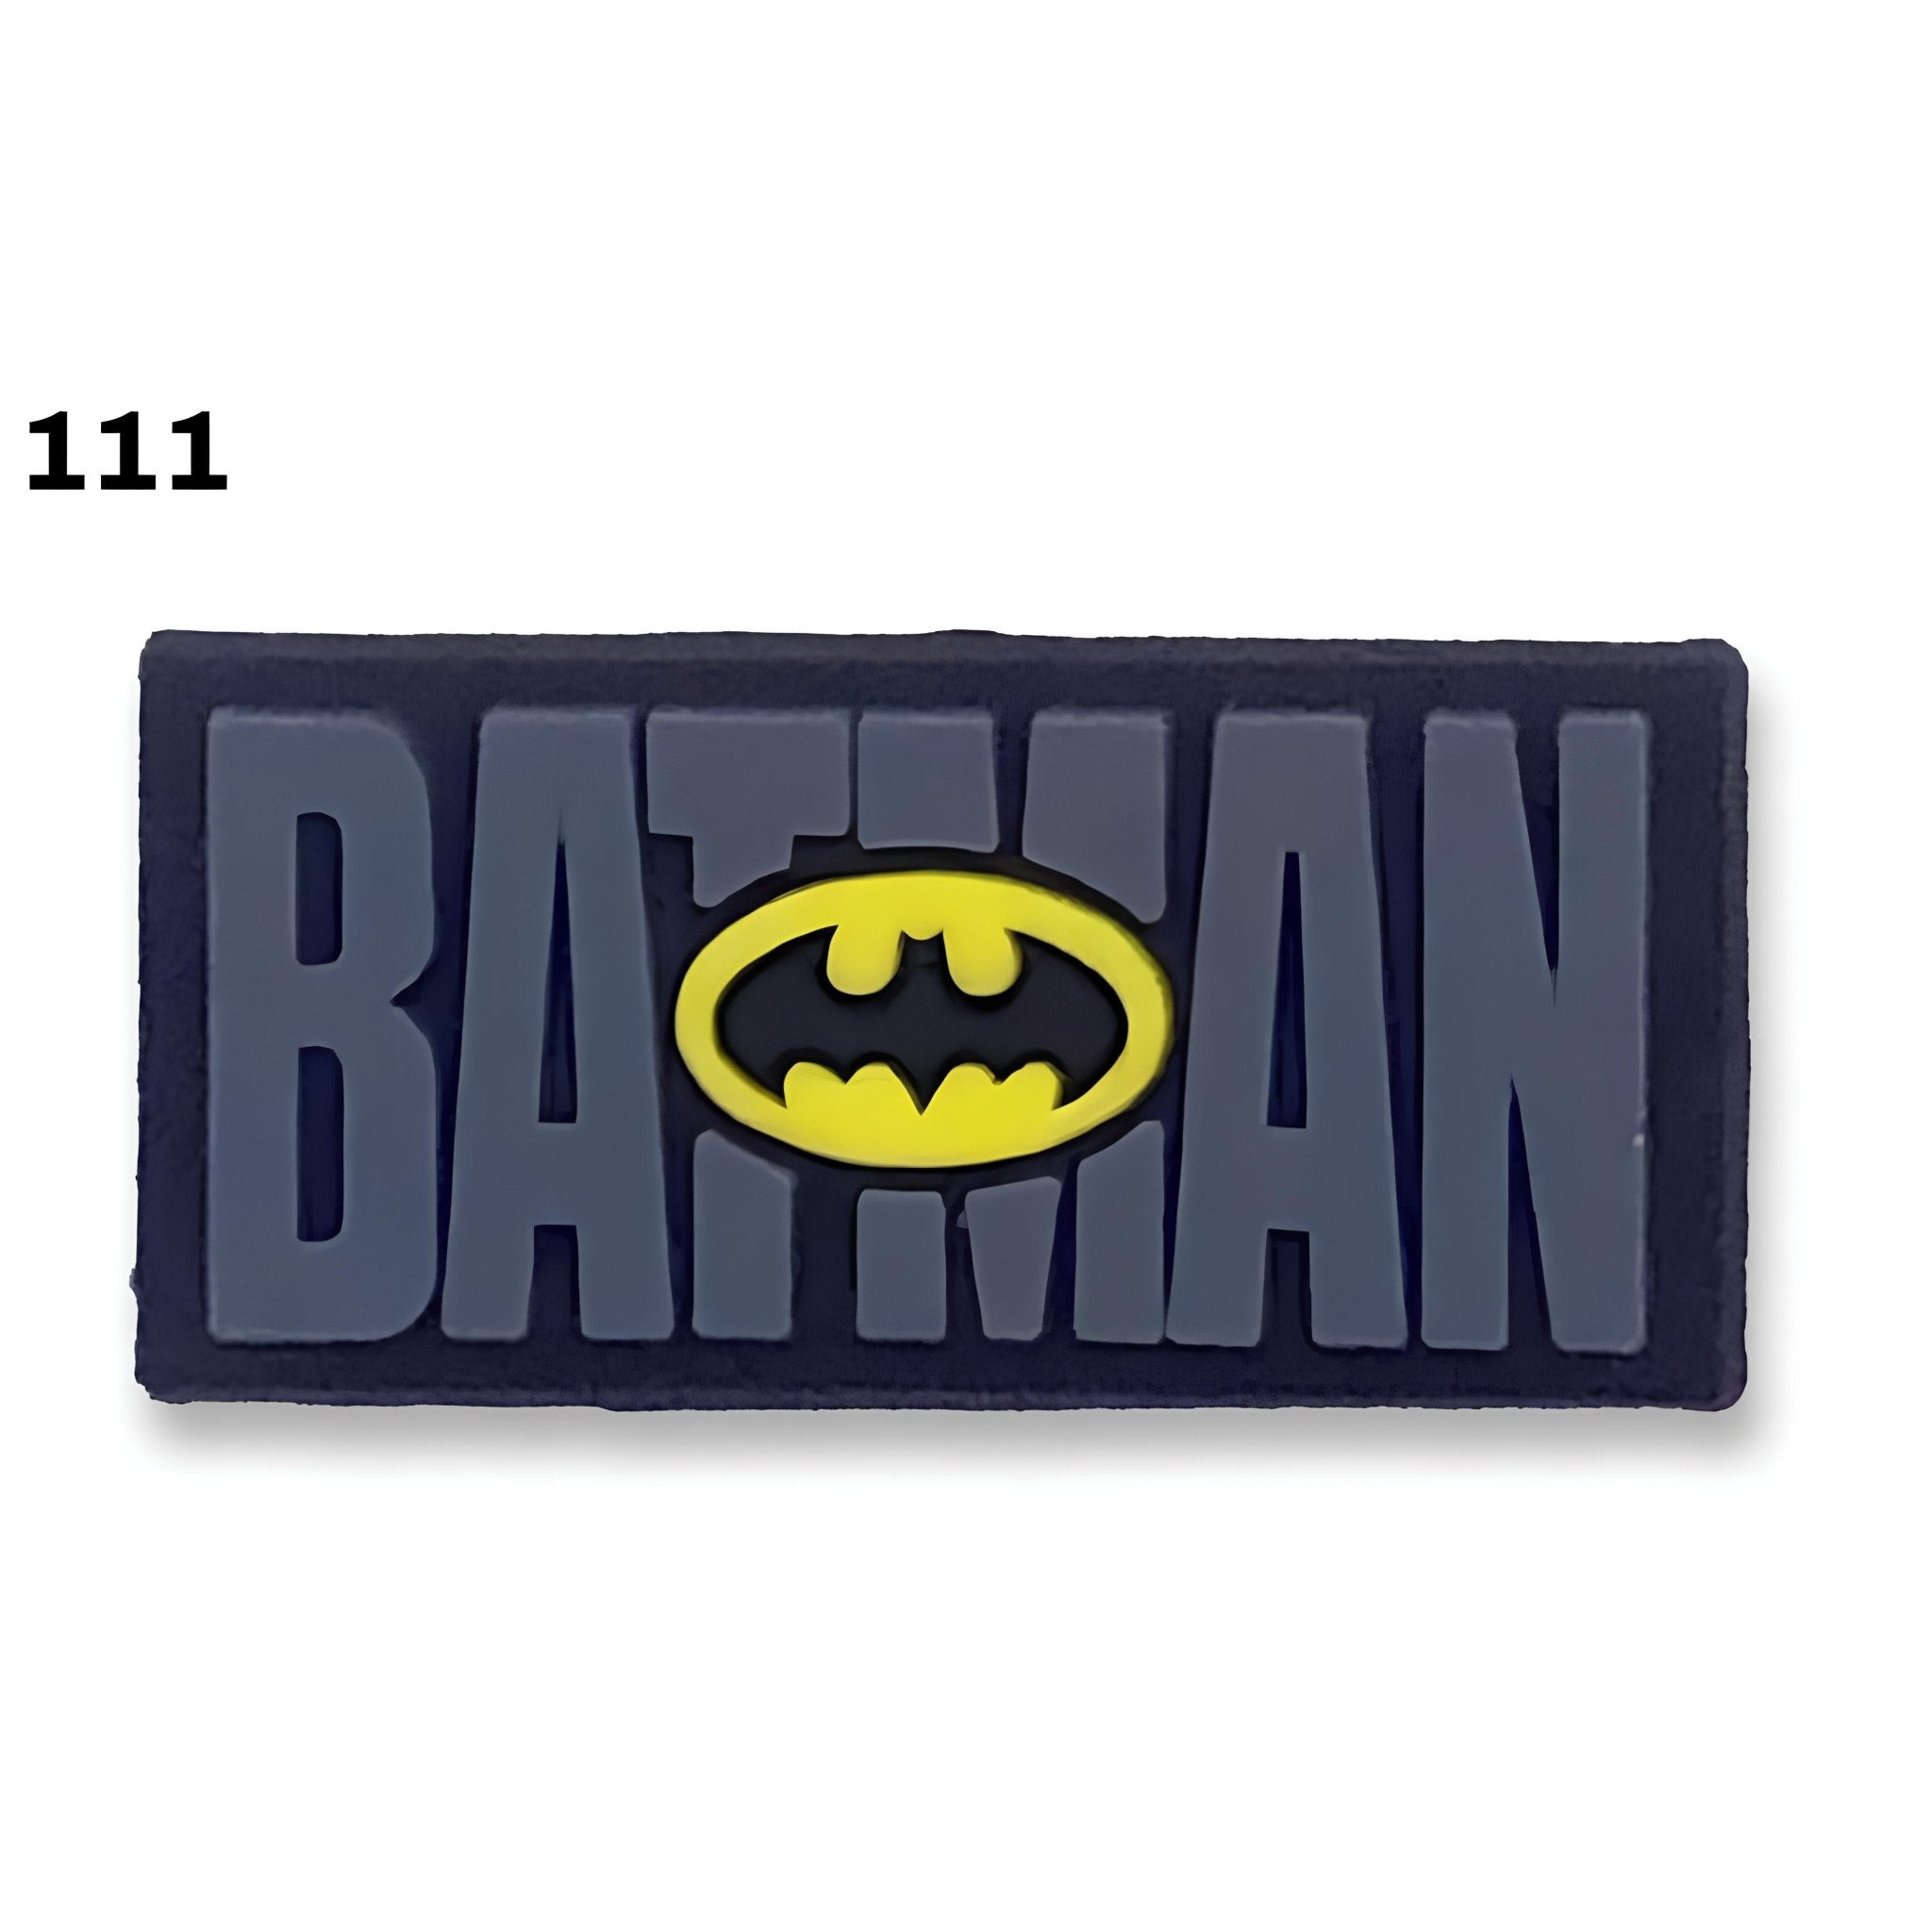 "Batman Logo Charm 🦇🔳: Iconic Vigilante Style!" - Questsole